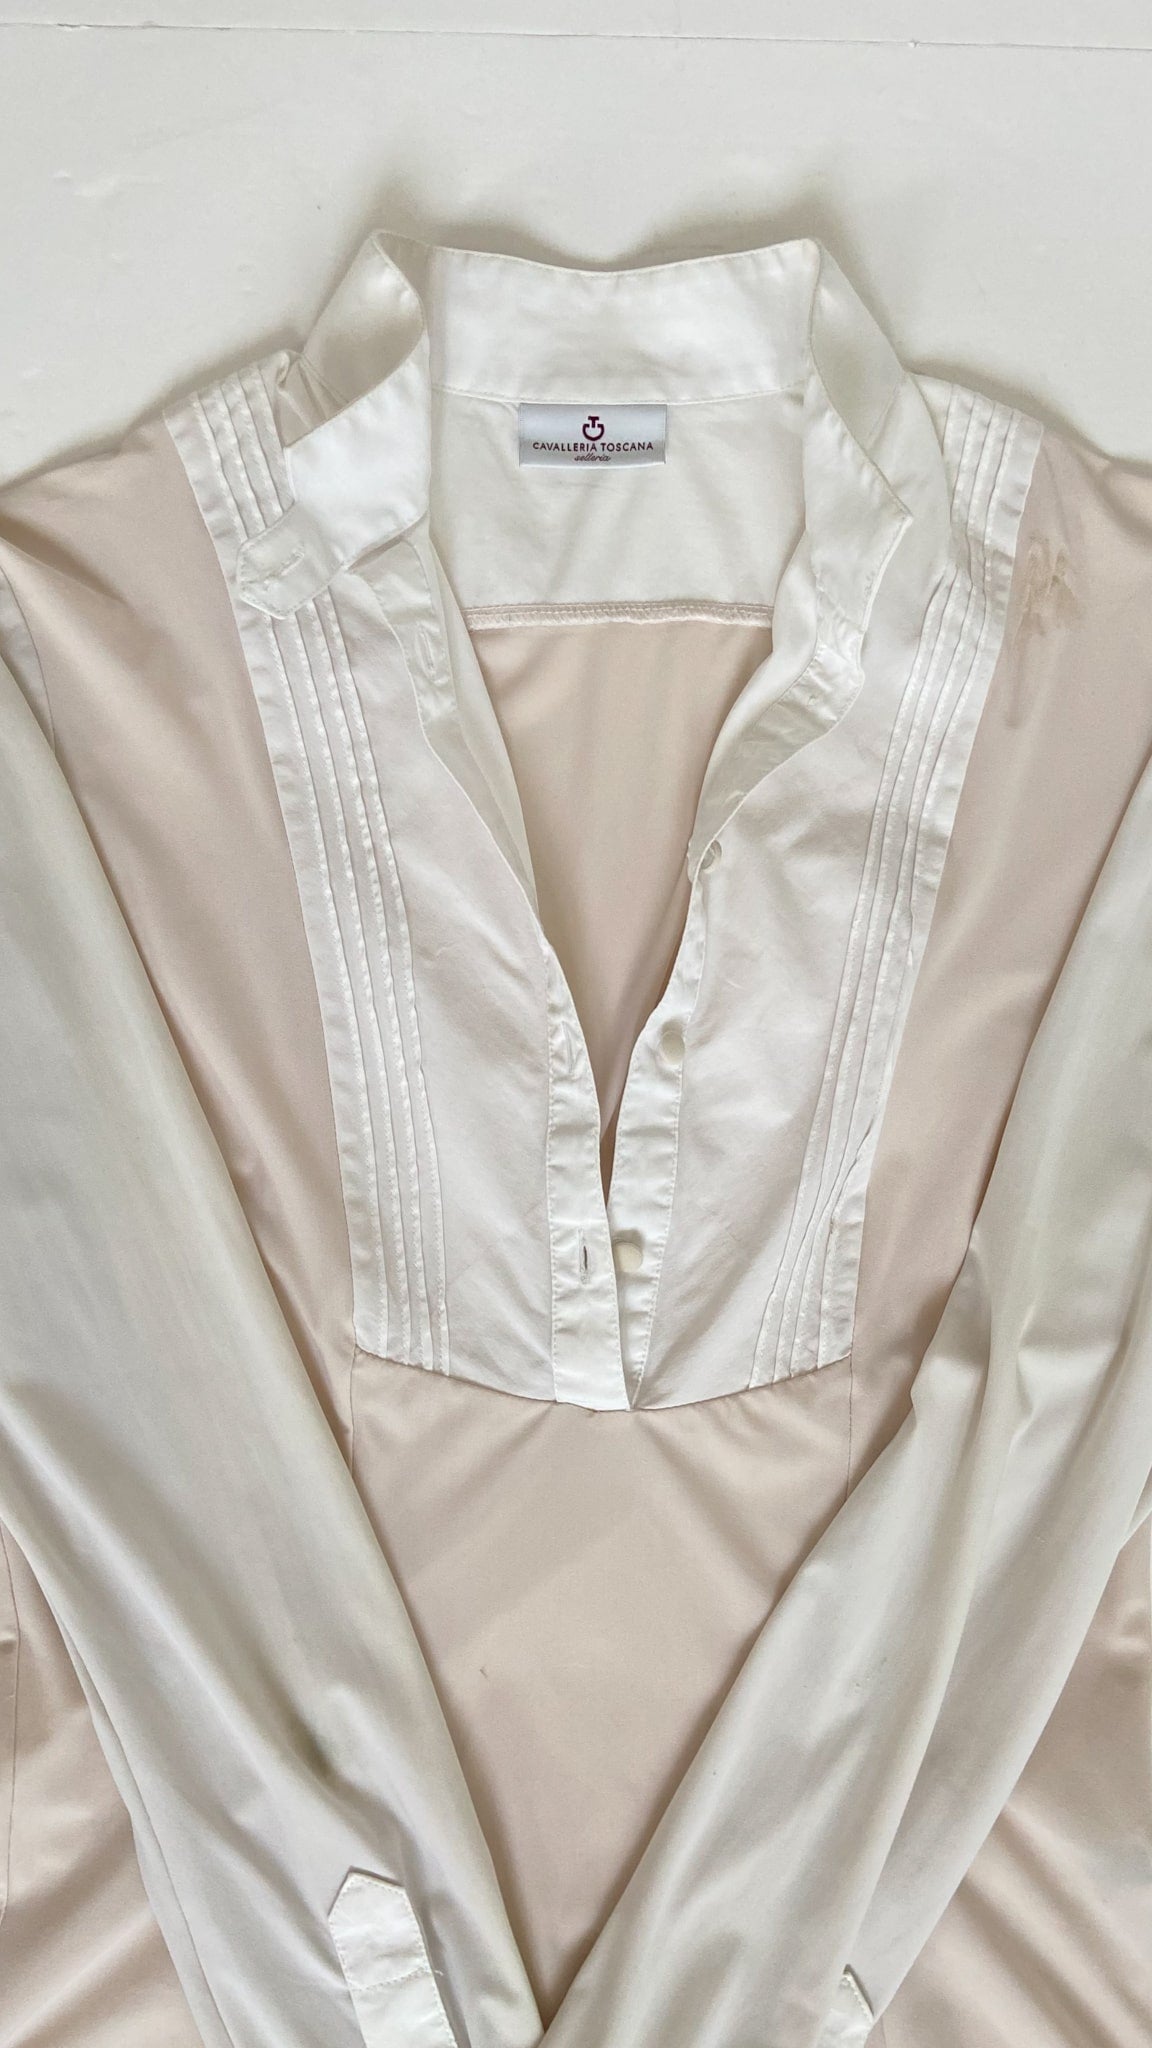 Cavalleria Toscana Competition Shirt - Blush/White - Women's XS